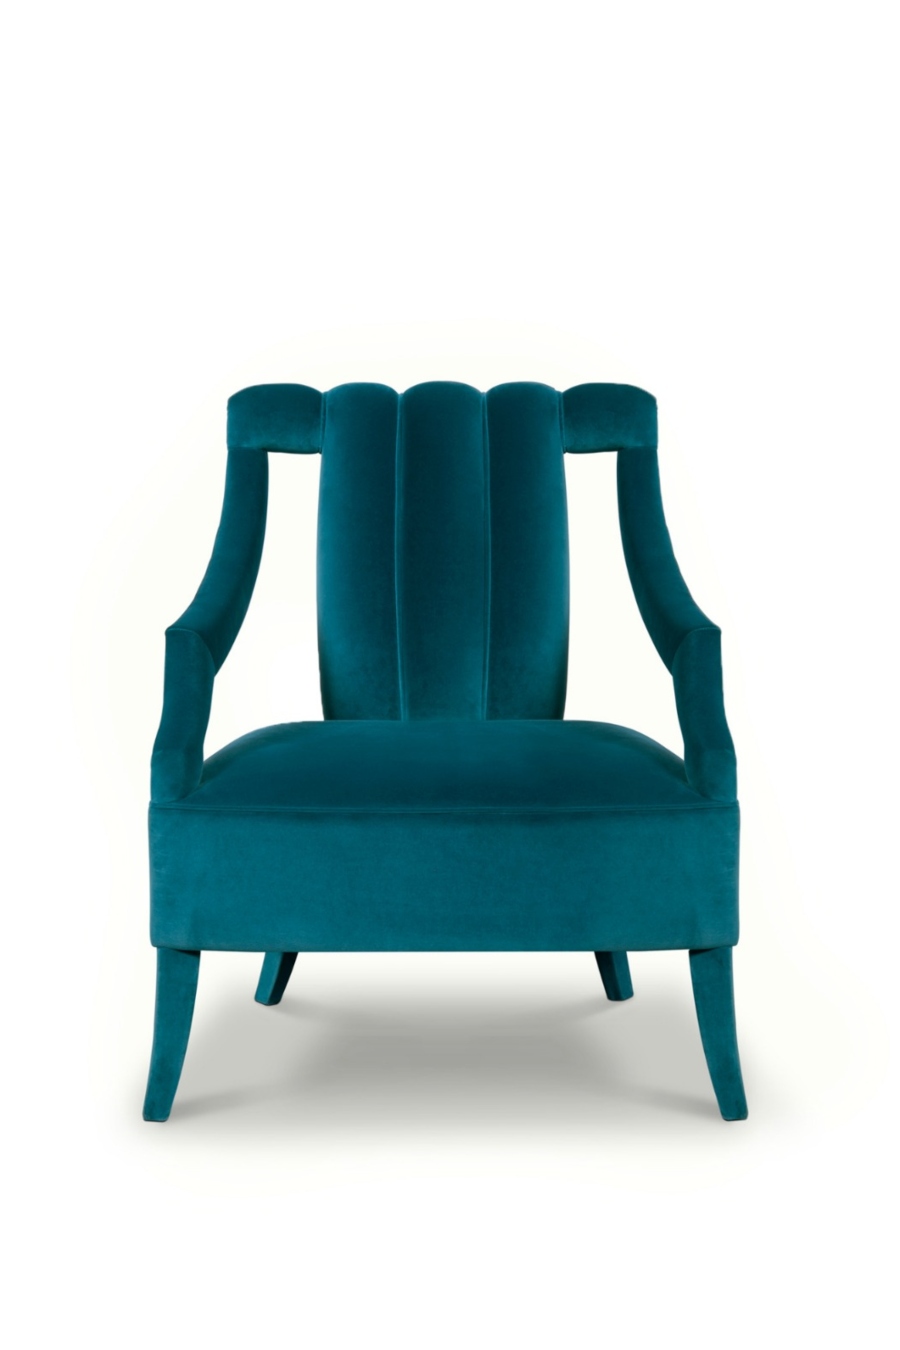 Modern Design Magazine Home'Society Winter Issue Second Edition blue velvet armchair